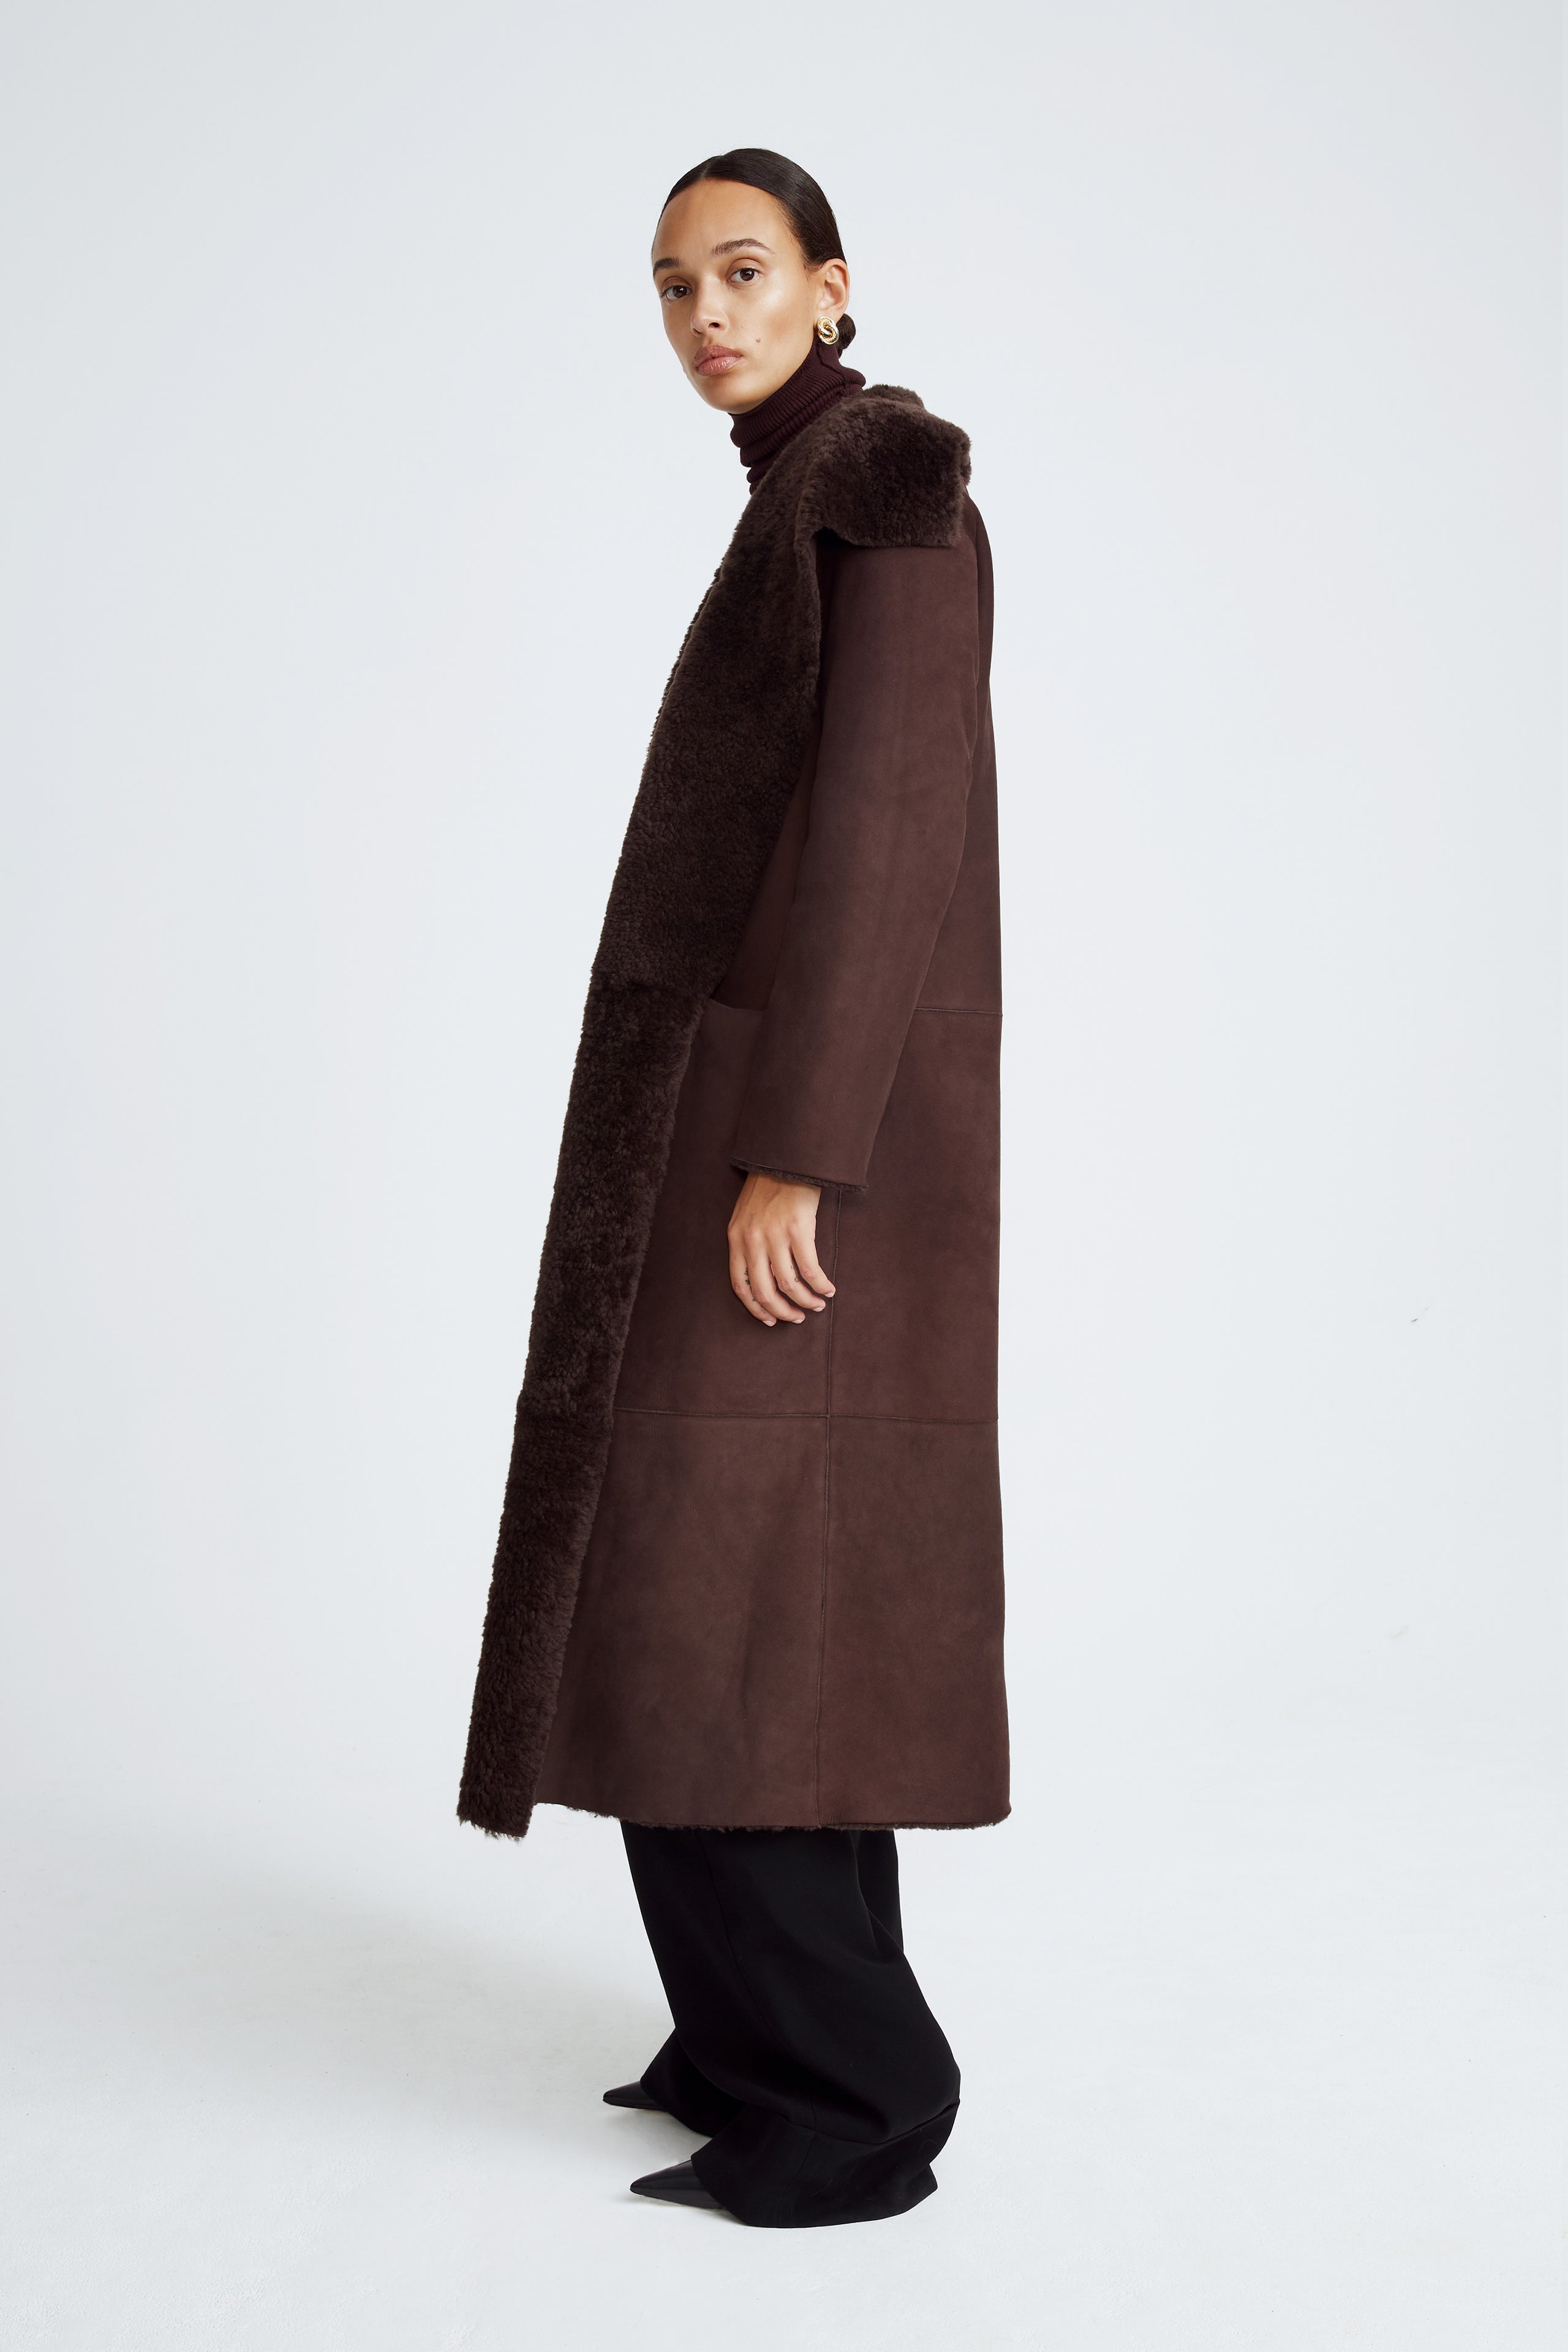 Model is wearing the Birthday Coat Dark Chocolate Draped Shearling Coat Side